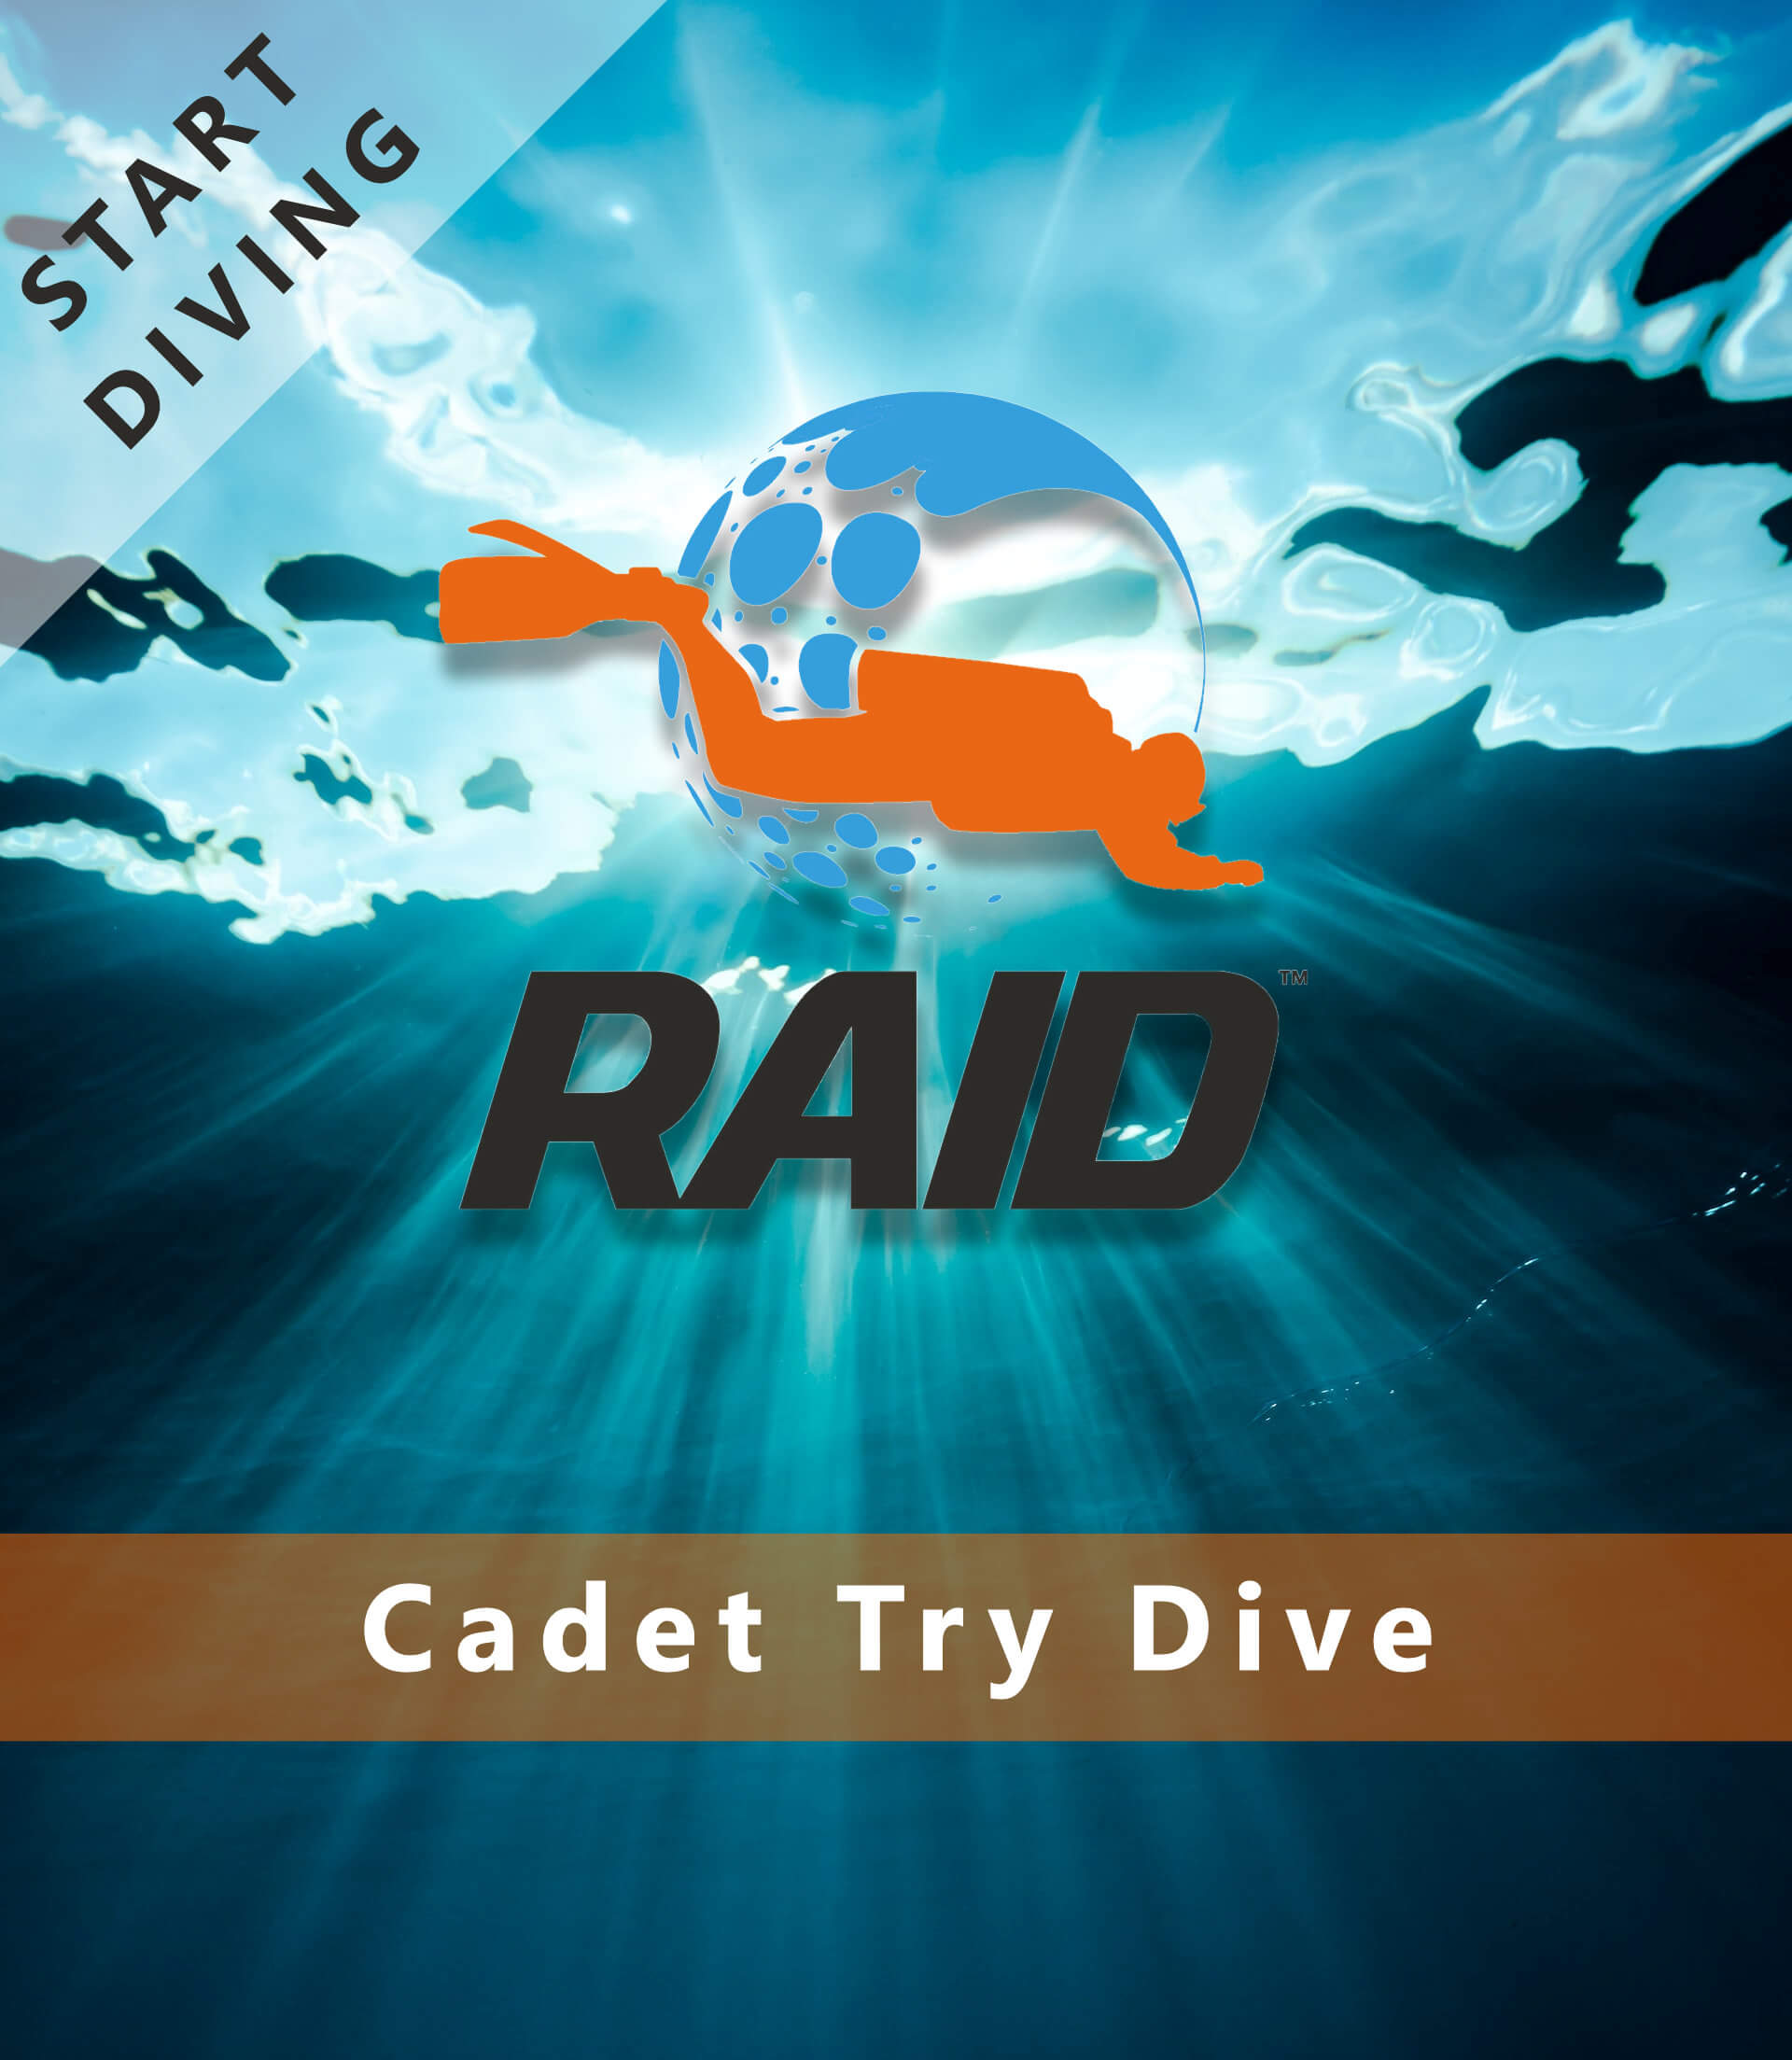 Start Diving / Cadet Try Dive - RAID International Scuba Diving Course